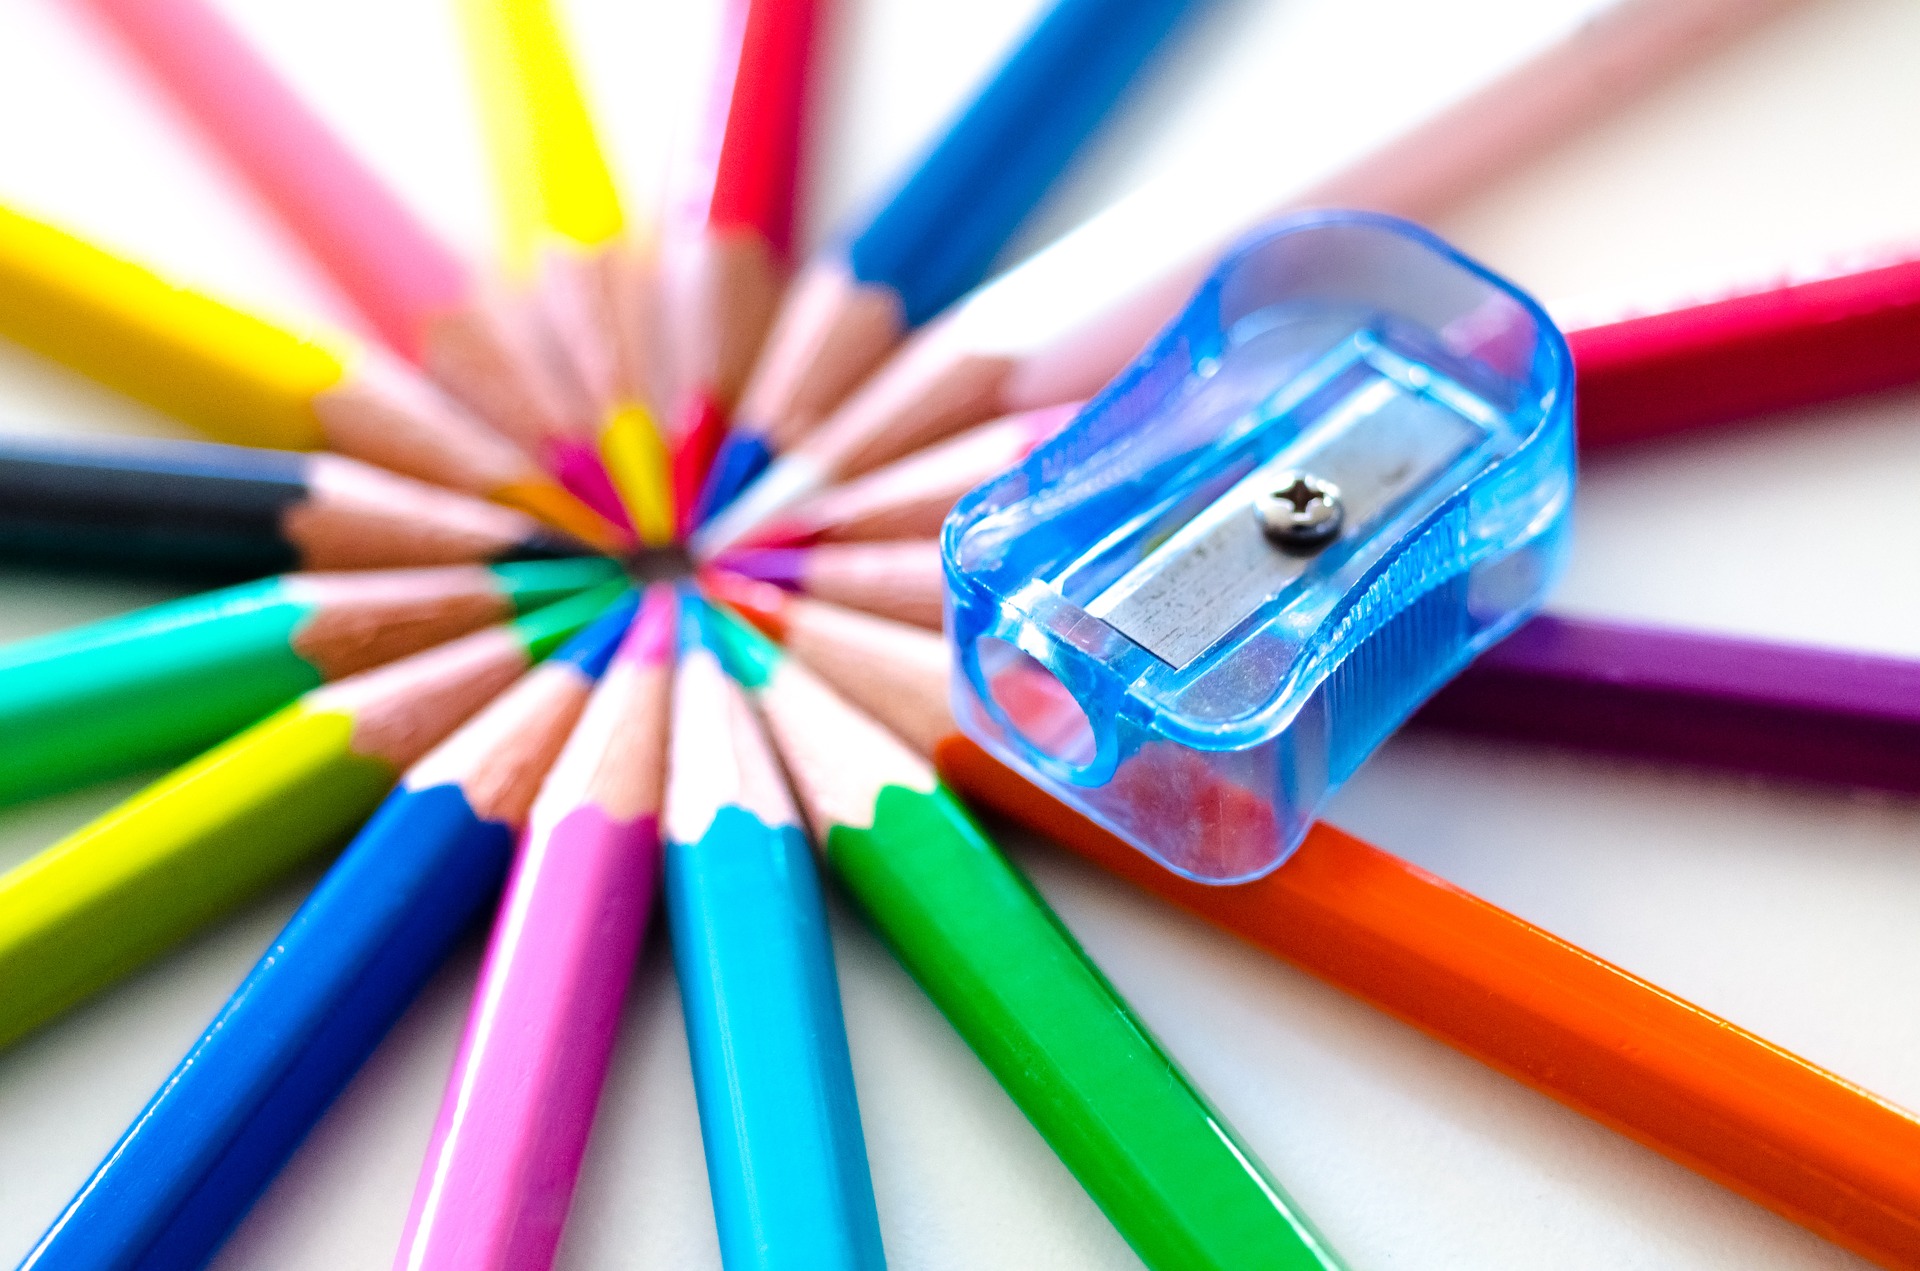 sharpener w colored pencils